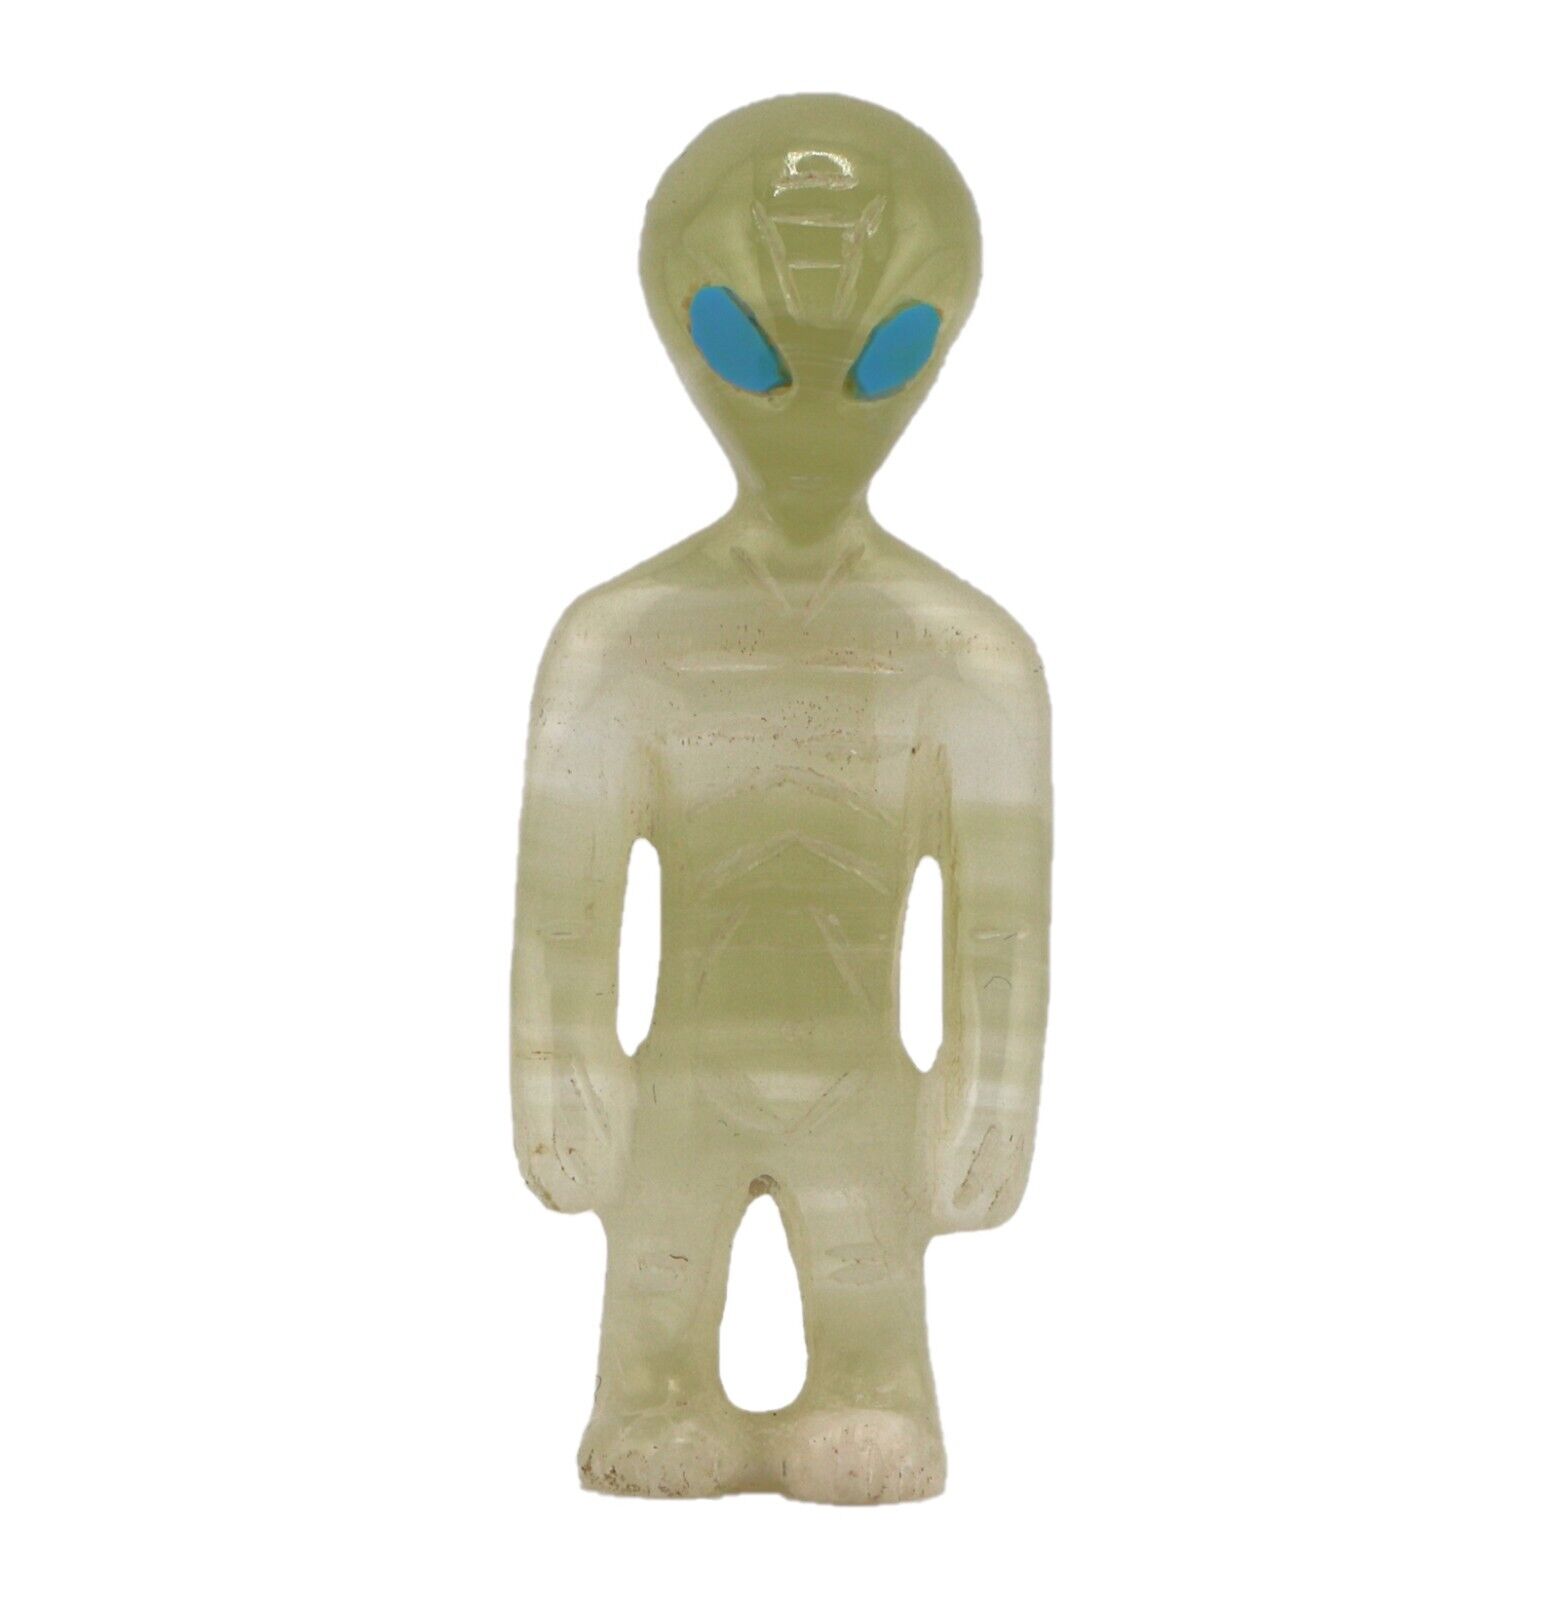 Zuni Fetish Hand-Carved Stone Grn Alien Area 51 Figurine Native NA Handmade Art